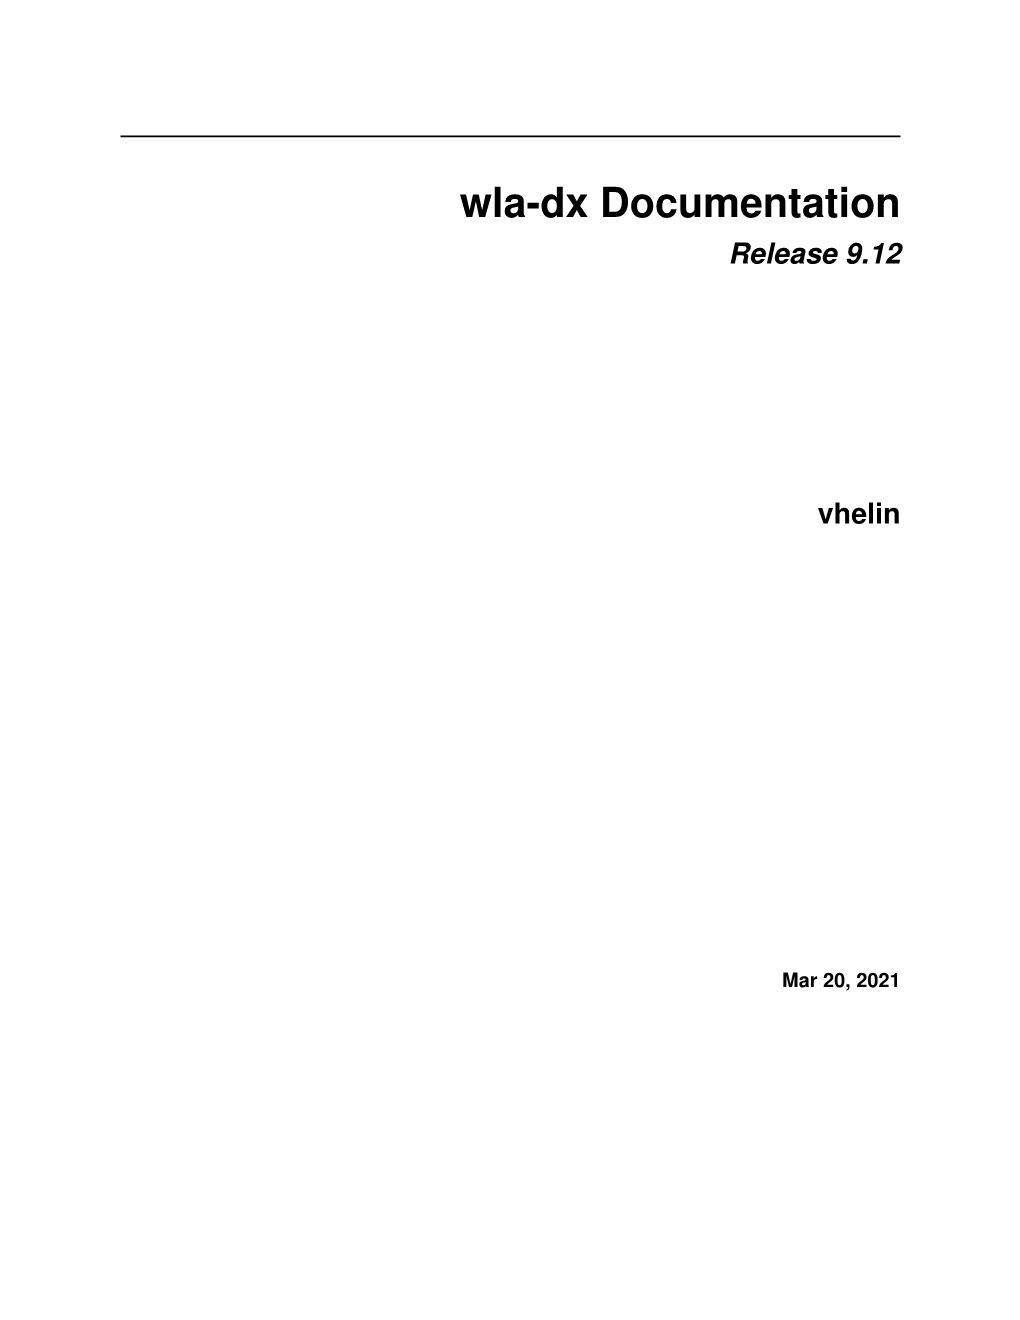 Wla-Dx Documentation Release 9.12